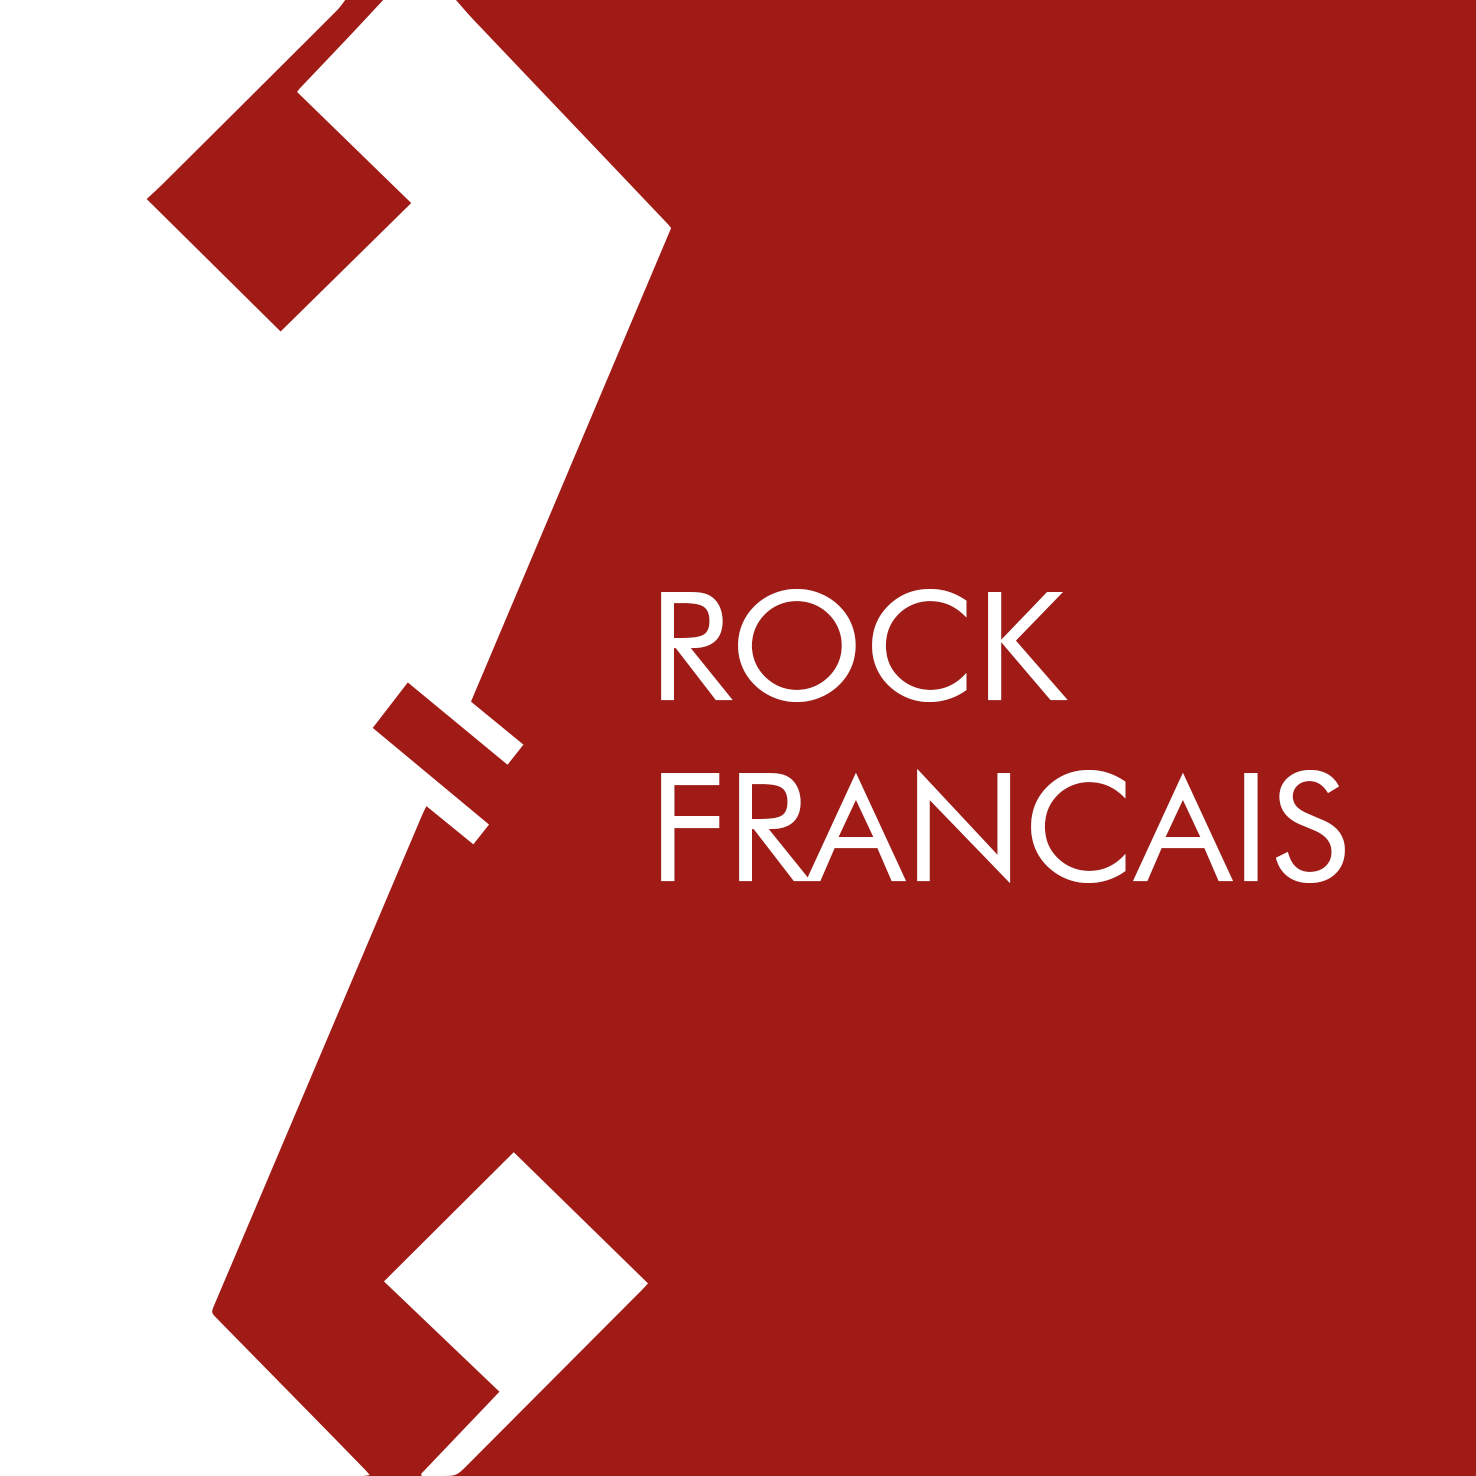 ROCK FRANCAIS